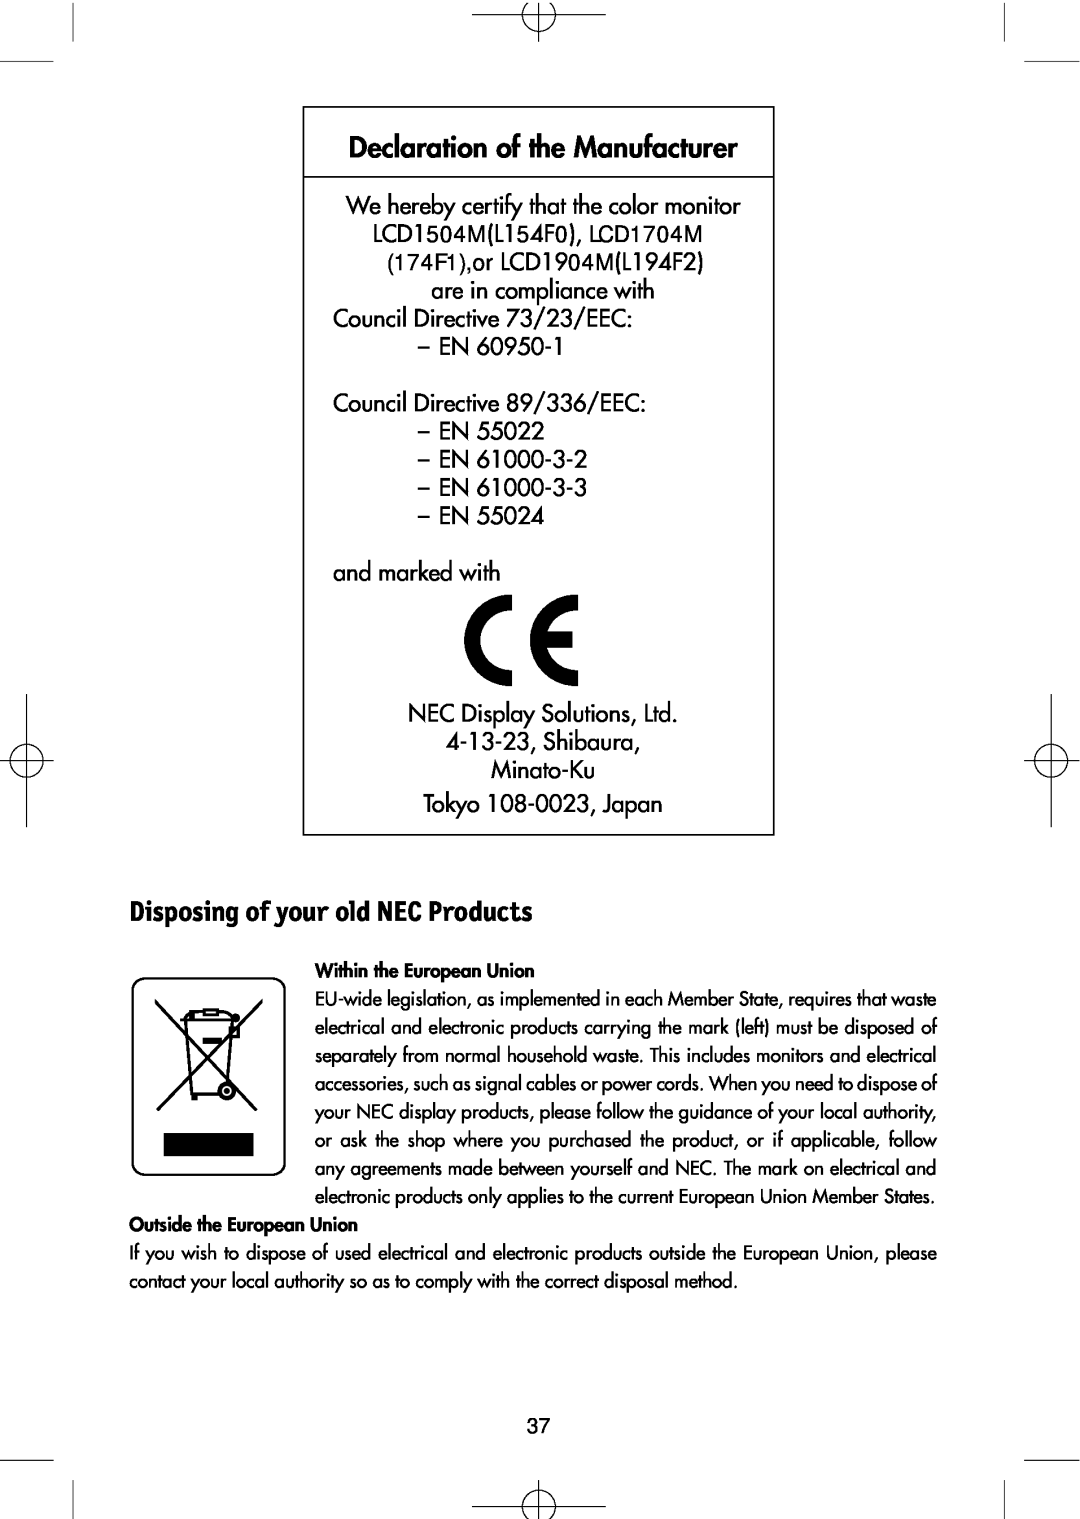 NEC LCD1904M, LCD1704M, LCD1504M manual Declaration of the Manufacturer, JTQPTJOHPGZPVSPME/&$1SPEVDUT 